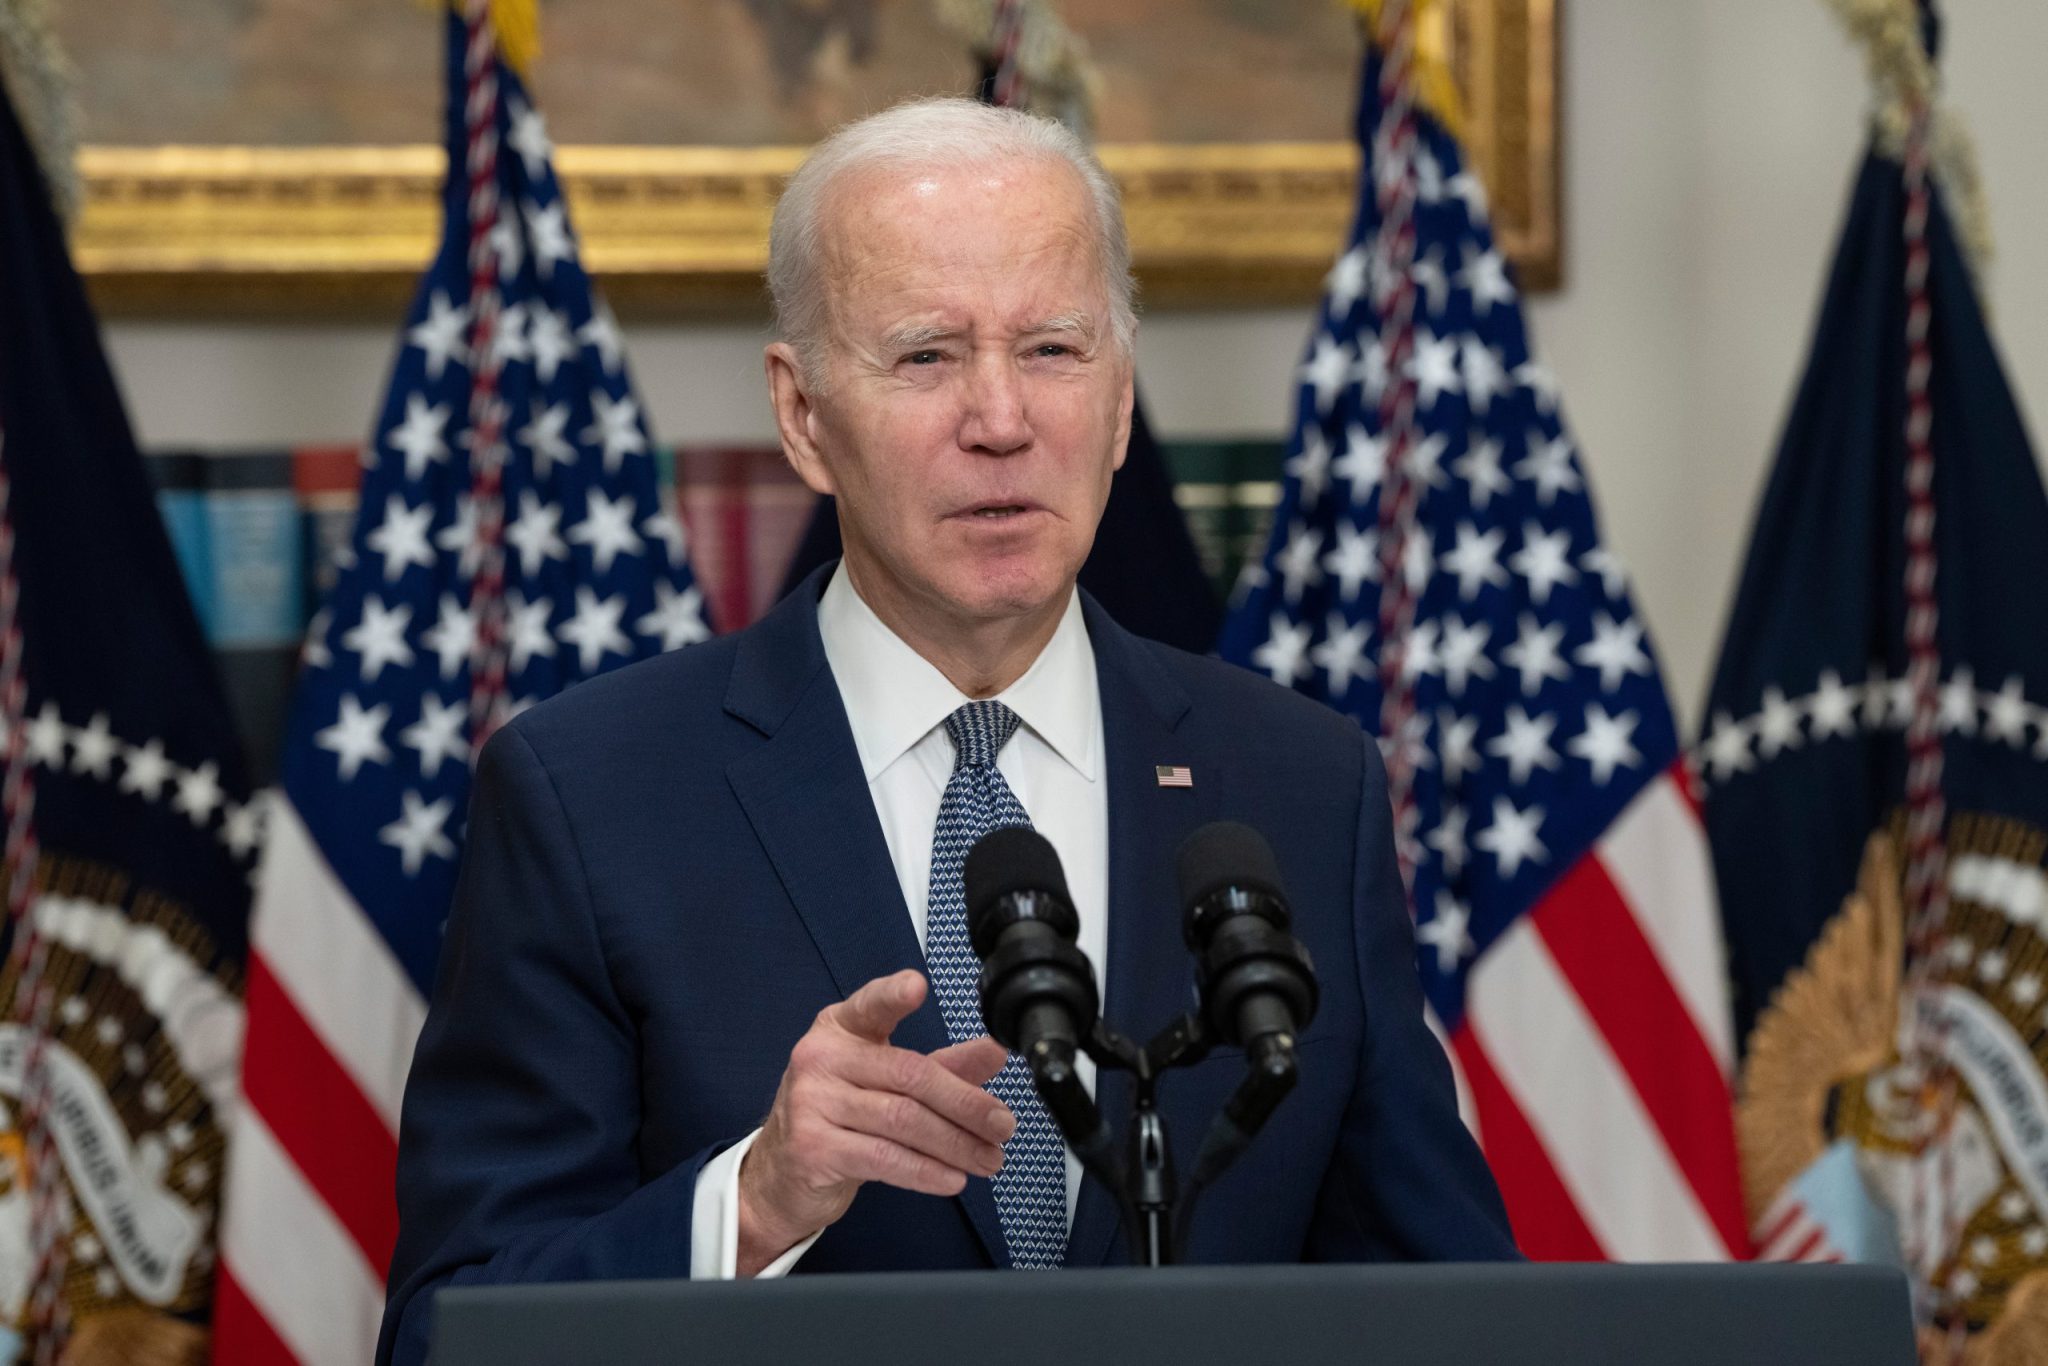 Washington, DC US - Mar 13, 2023: US President Joe Biden speaking in front of American flag